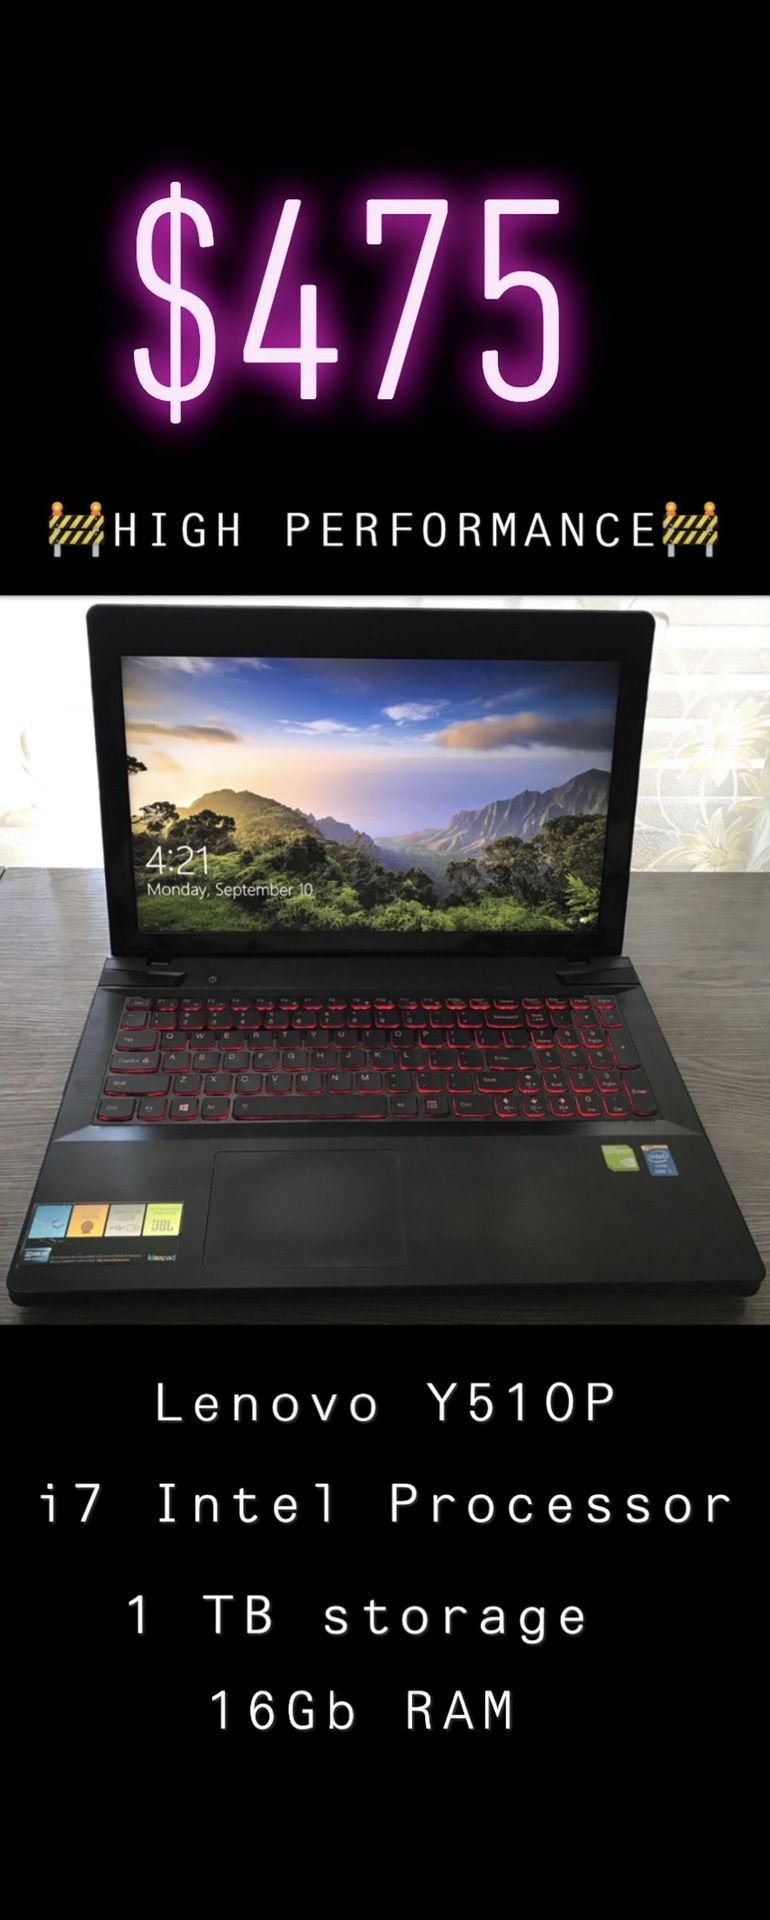 High Performance Lenovo Ideapad Y510p laptop